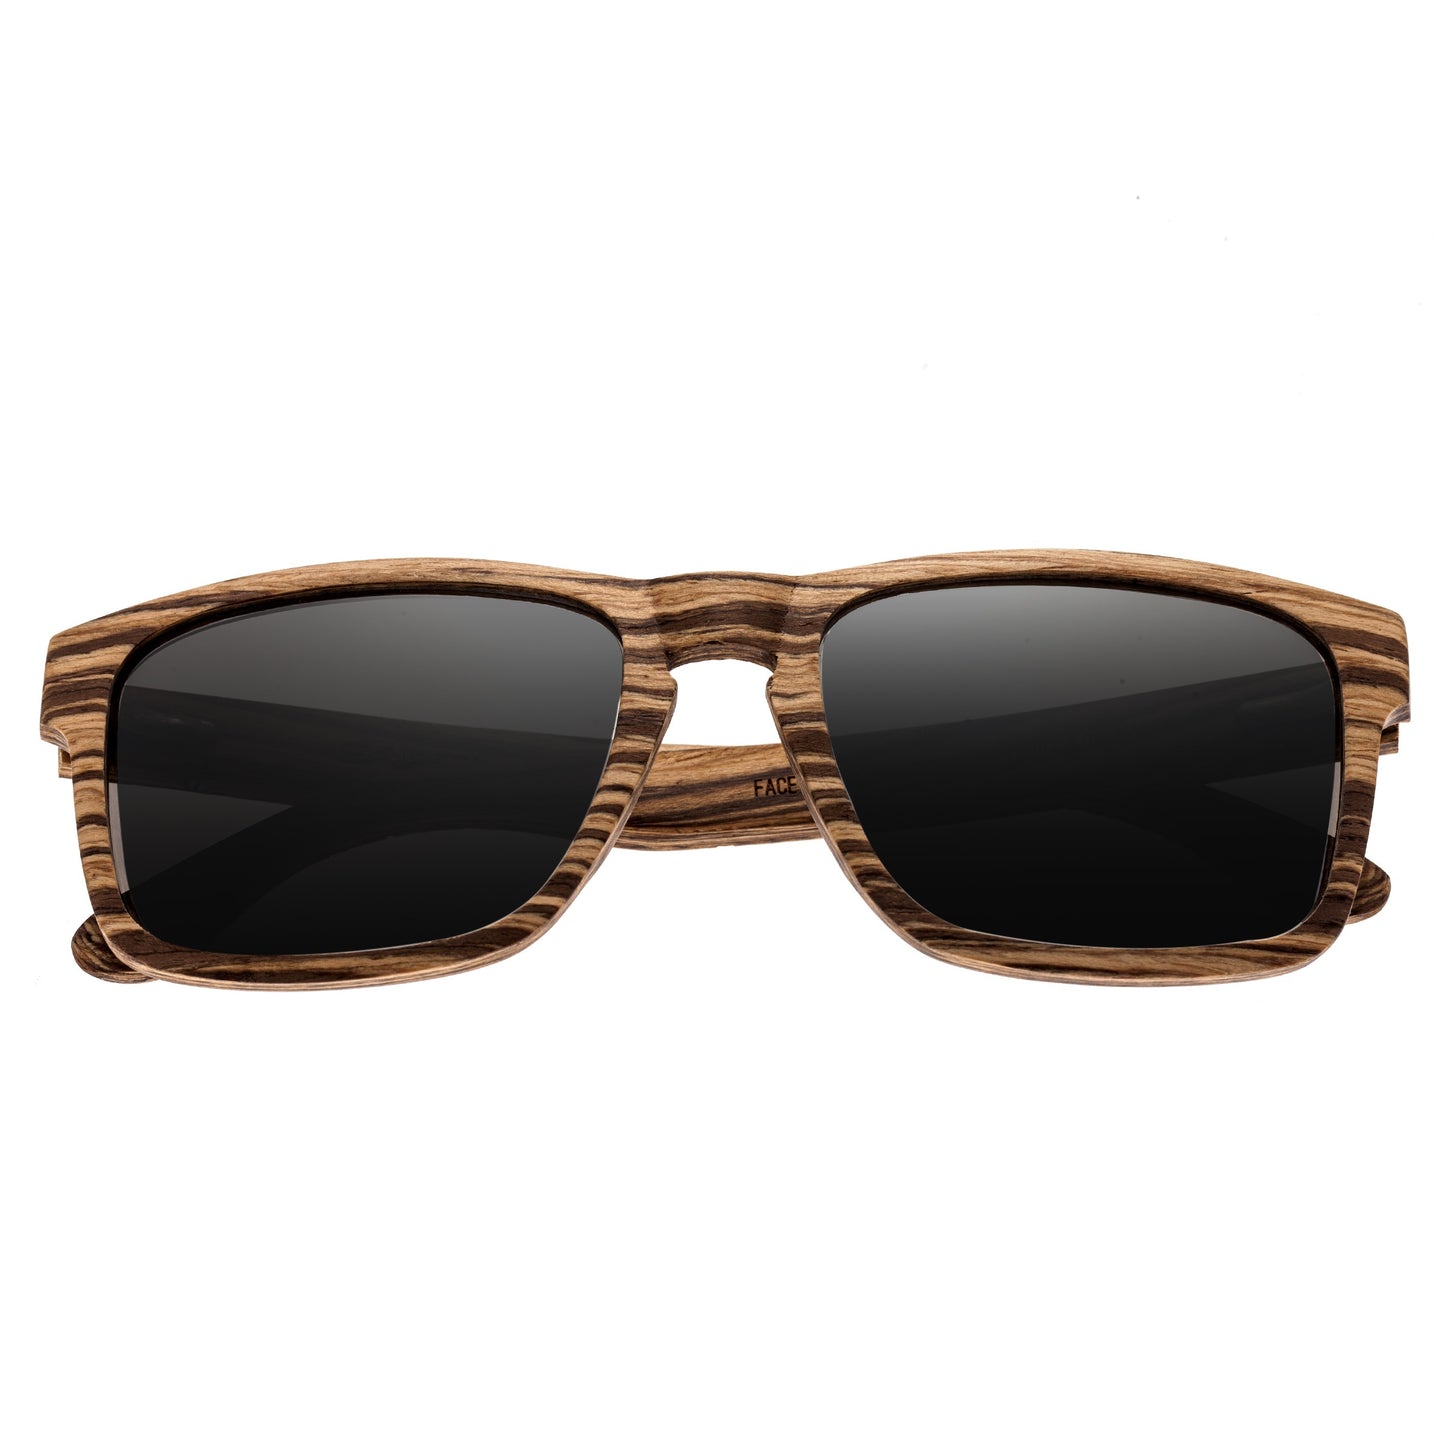 Earth Wood Whitehaven Polarized Sunglasses - Zebrawood/Black - ESG080Z